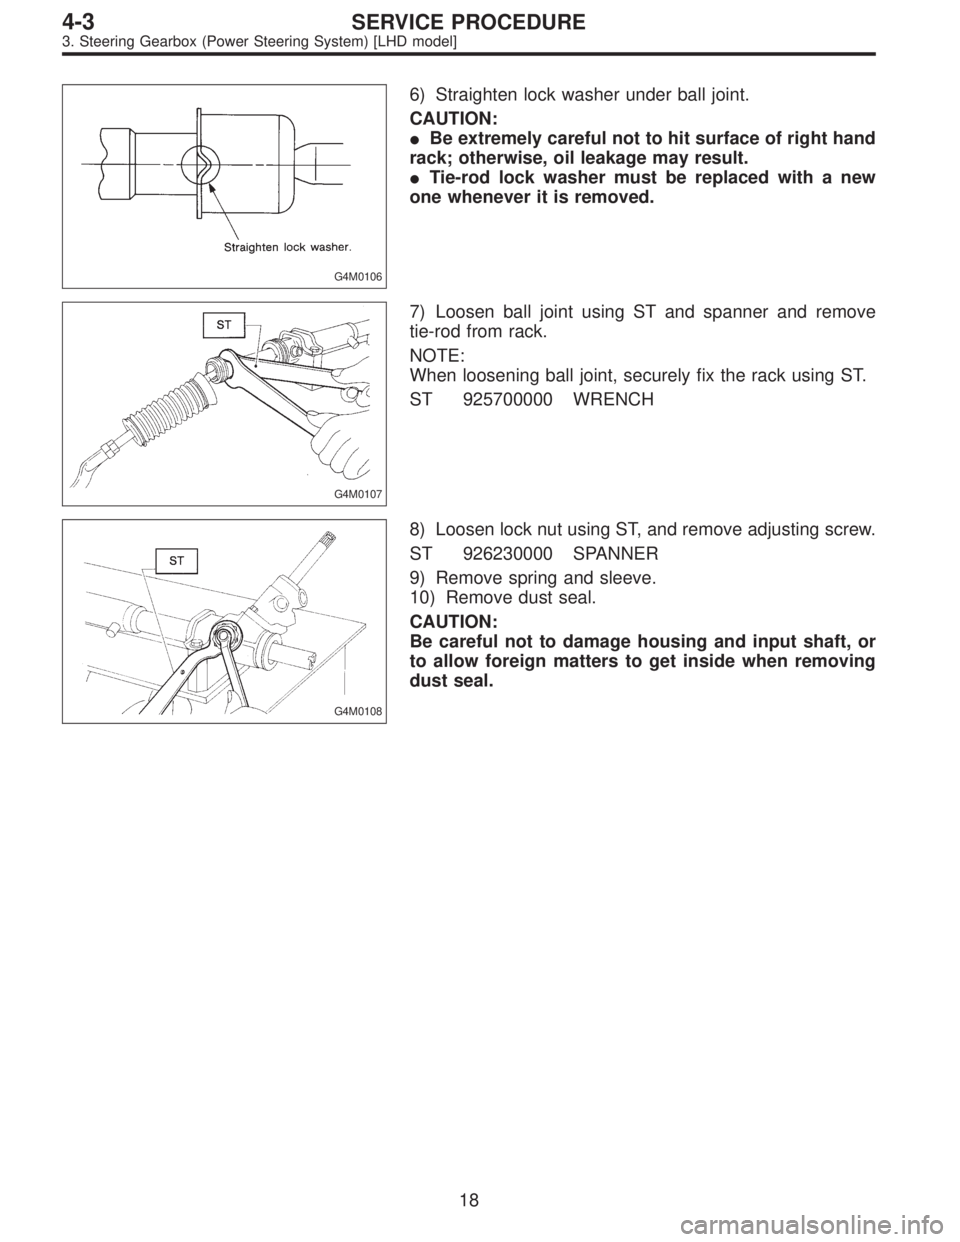 SUBARU LEGACY 1997  Service Repair Manual G4M0106
6) Straighten lock washer under ball joint.
CAUTION:
Be extremely careful not to hit surface of right hand
rack; otherwise, oil leakage may result.
Tie-rod lock washer must be replaced with 